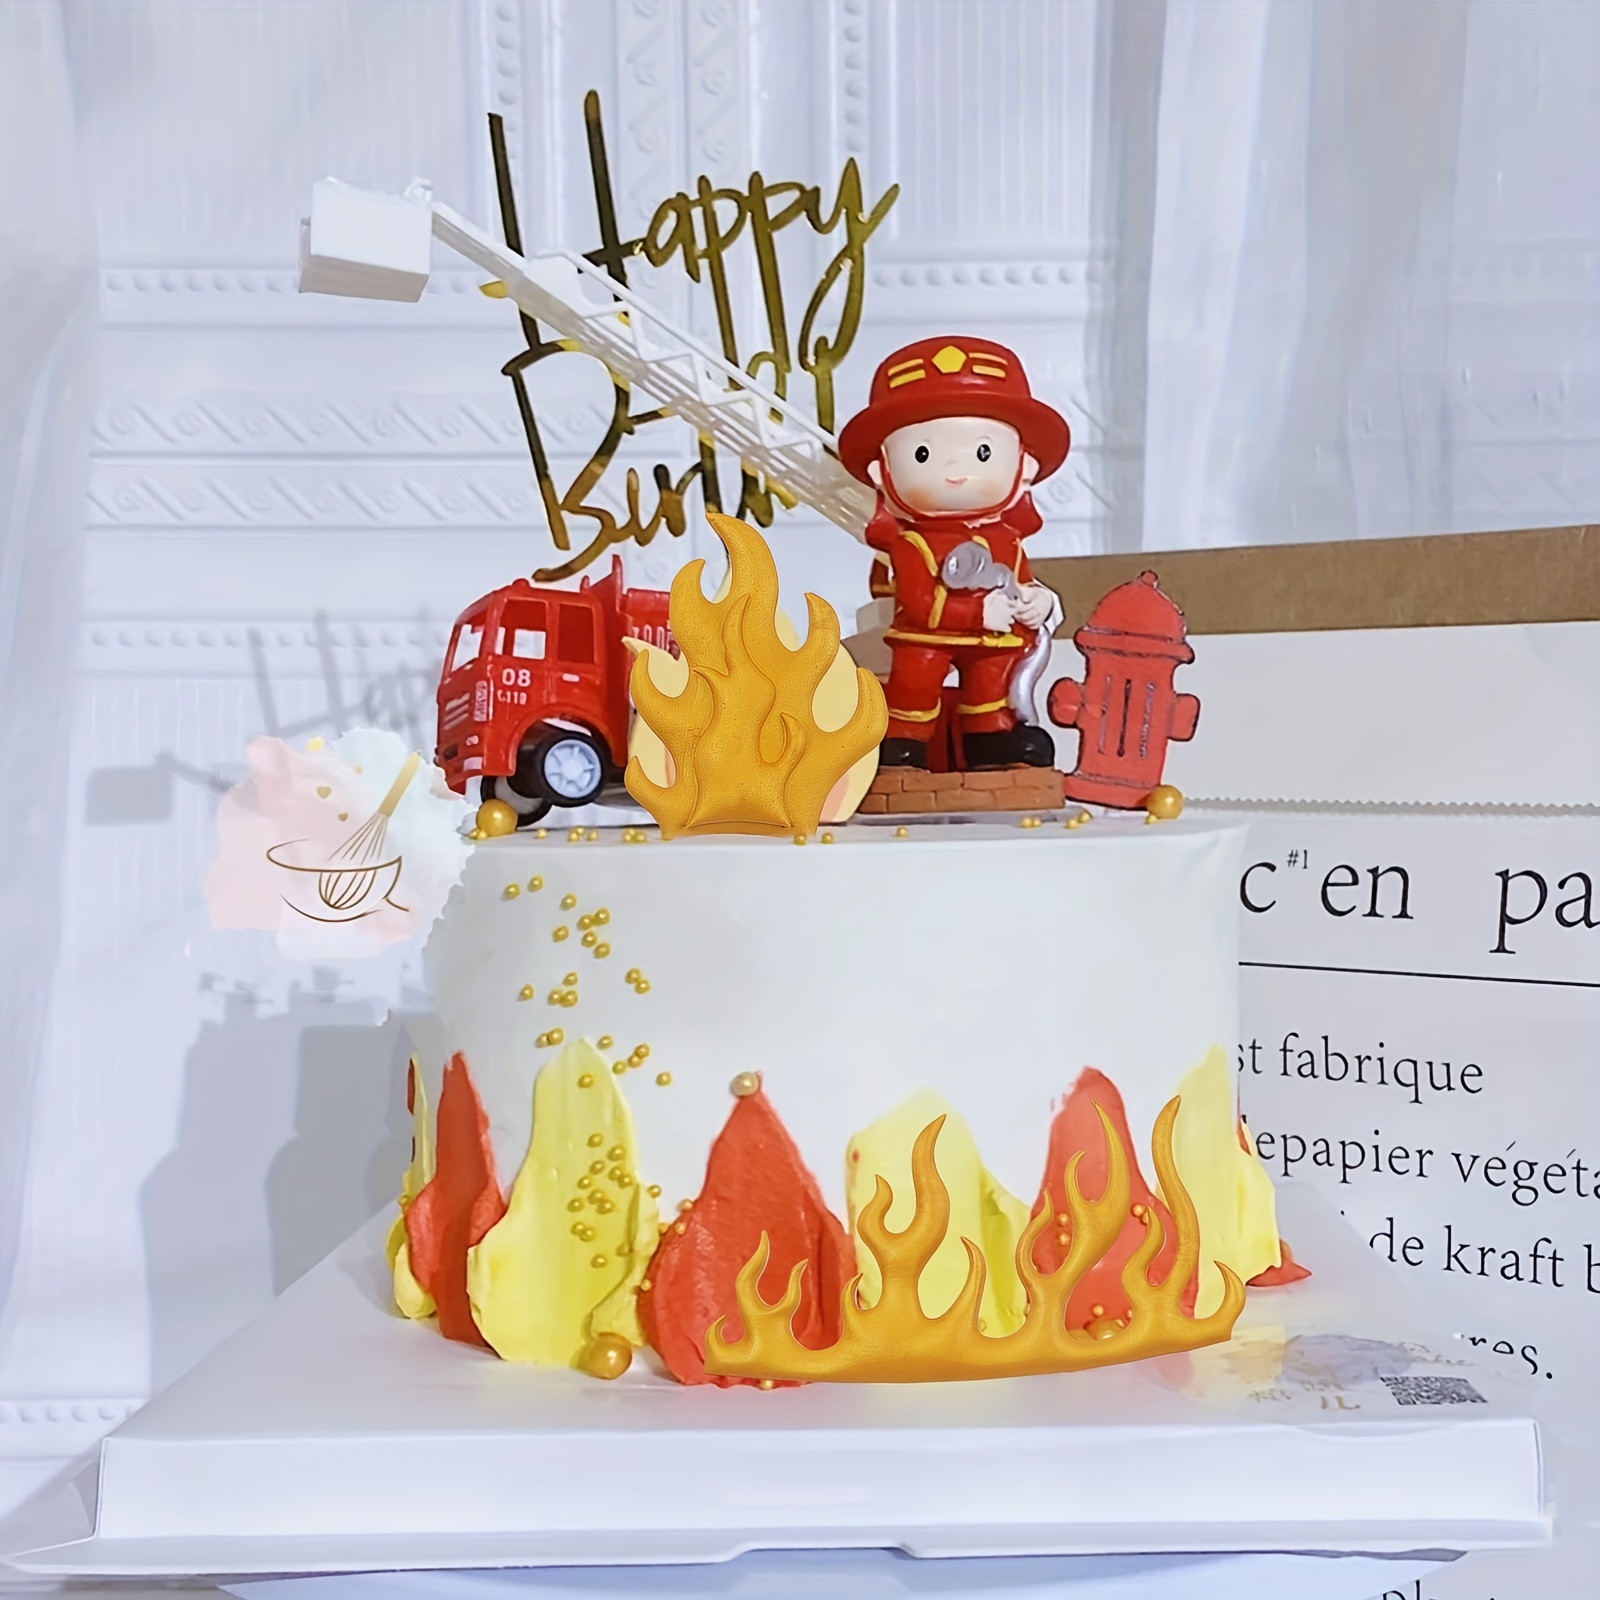 Fire flame shape fondant cutter. (Cake decorating supply).